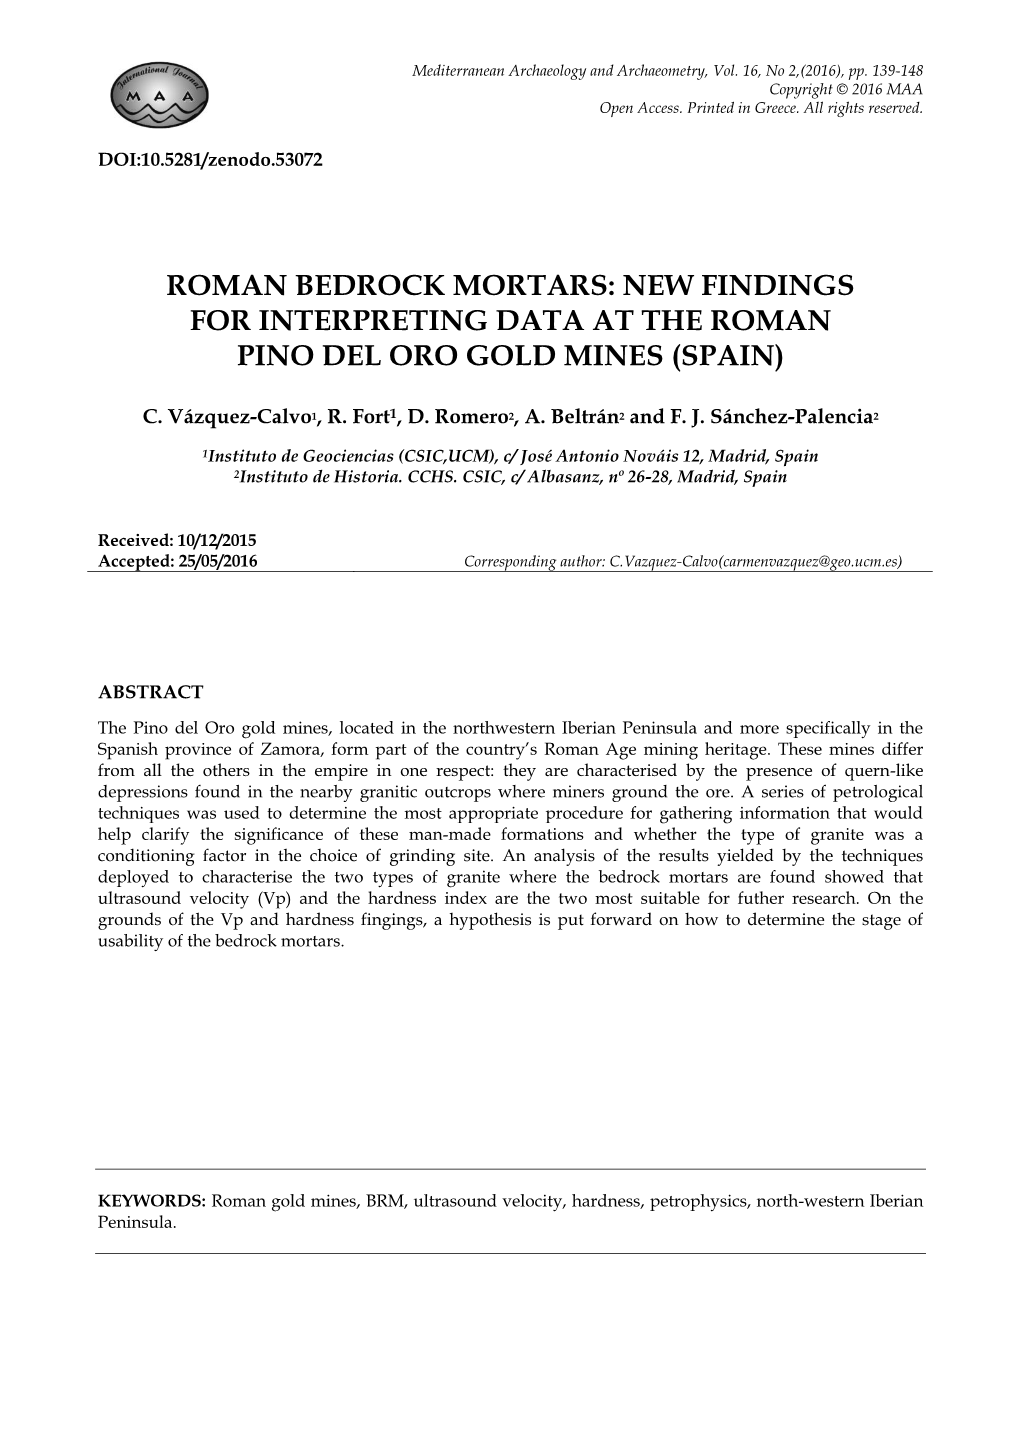 Roman Bedrock Mortars: New Findings for Interpreting Data at the Roman Pino Del Oro Gold Mines (Spain)